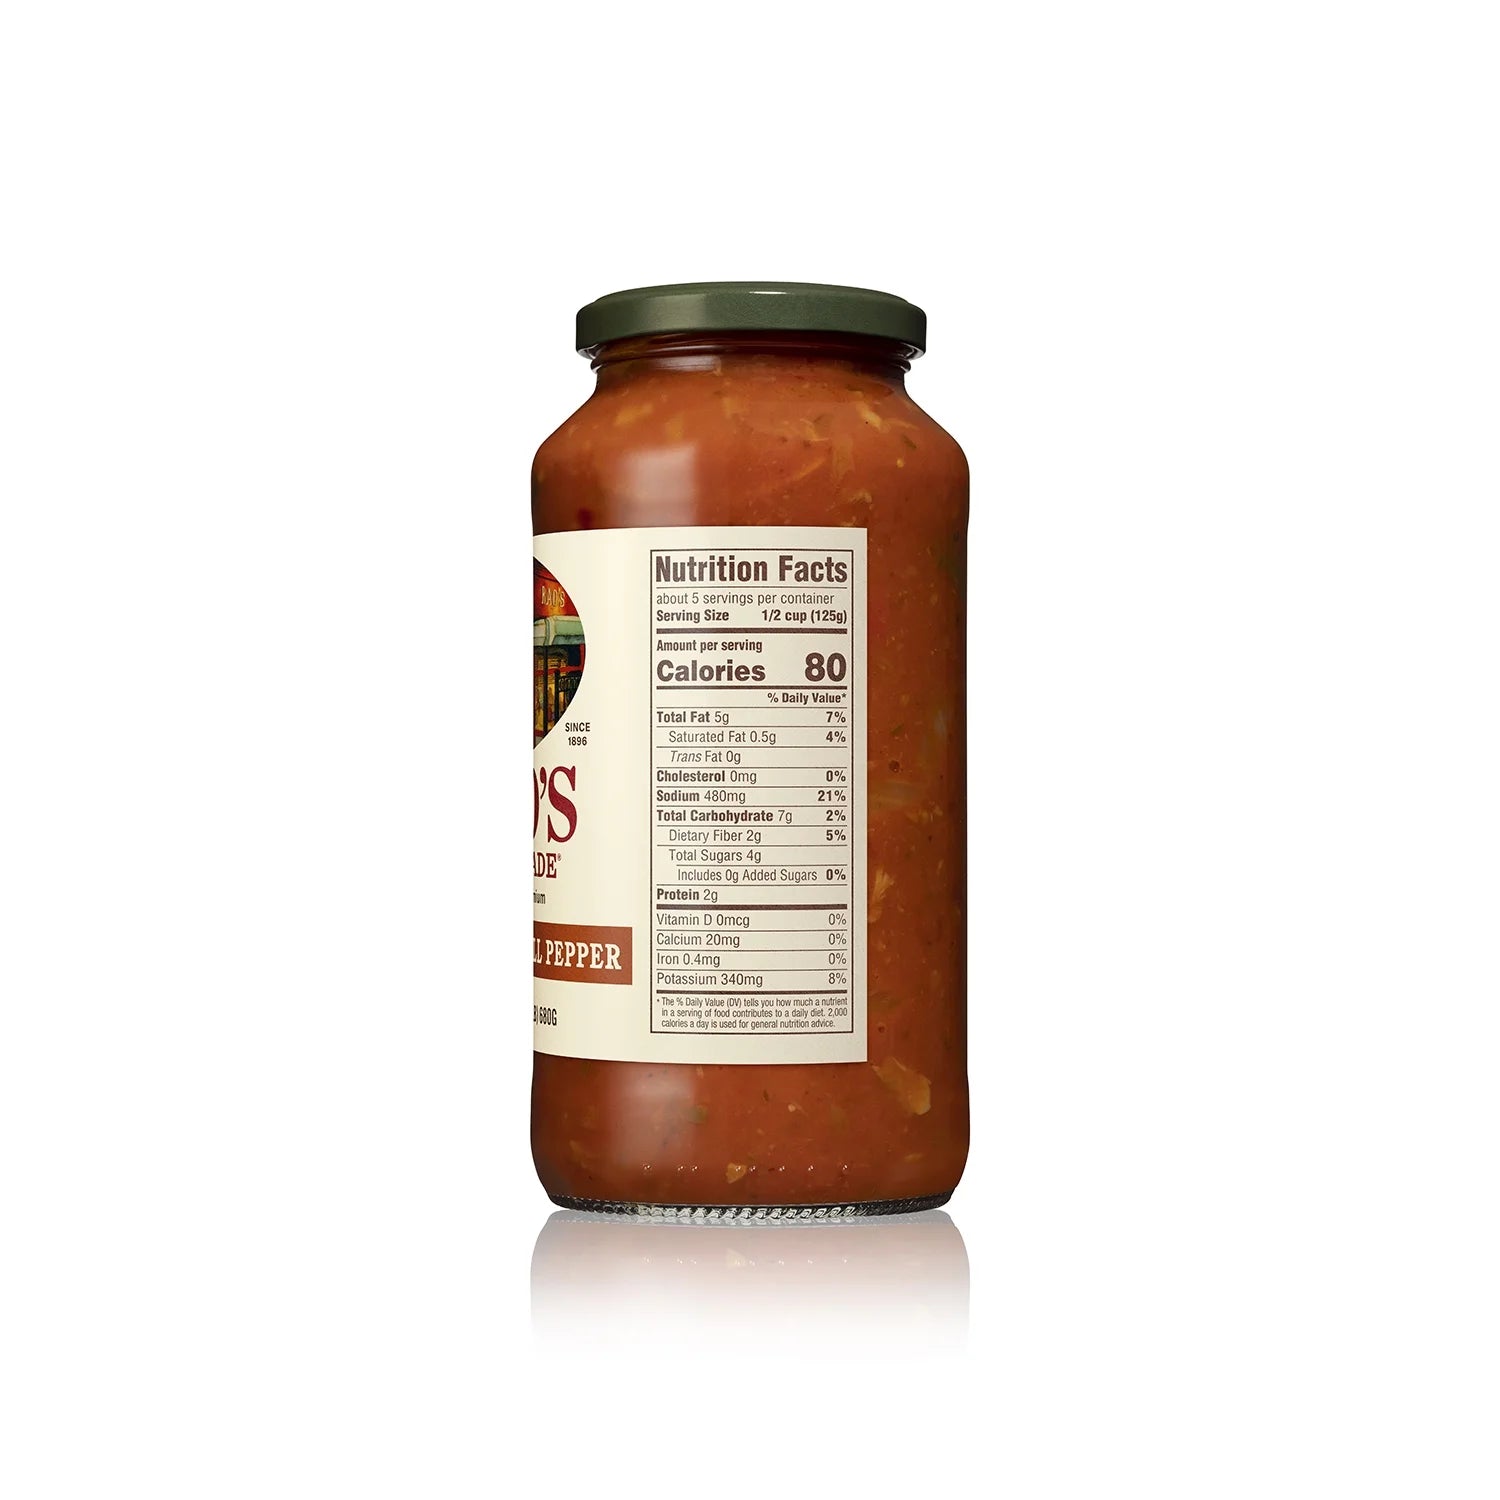 Mushroom & Bell Pepper Pasta Sauce, Keto Friendly, Low Carb 24 Oz